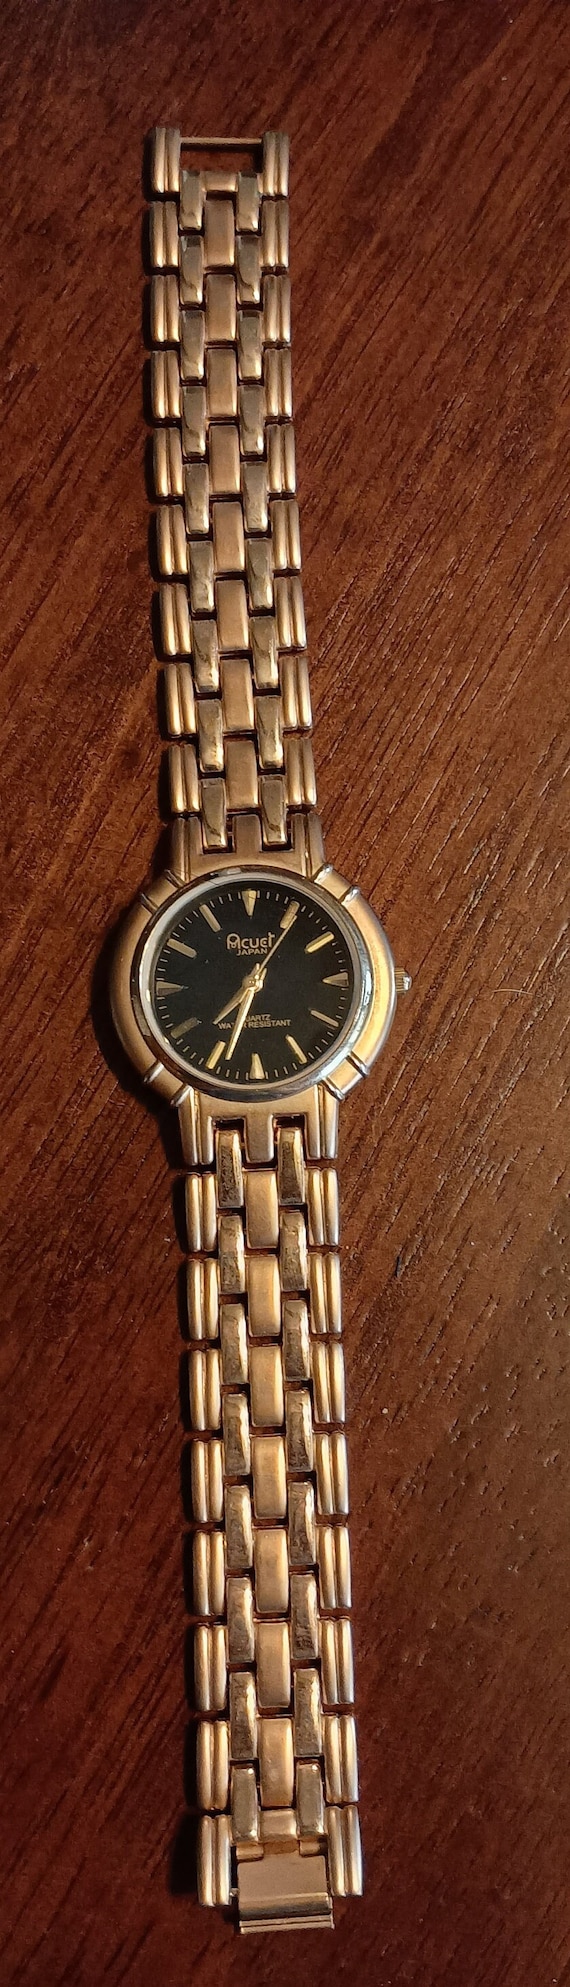 acuet japan vintage gold tone watch